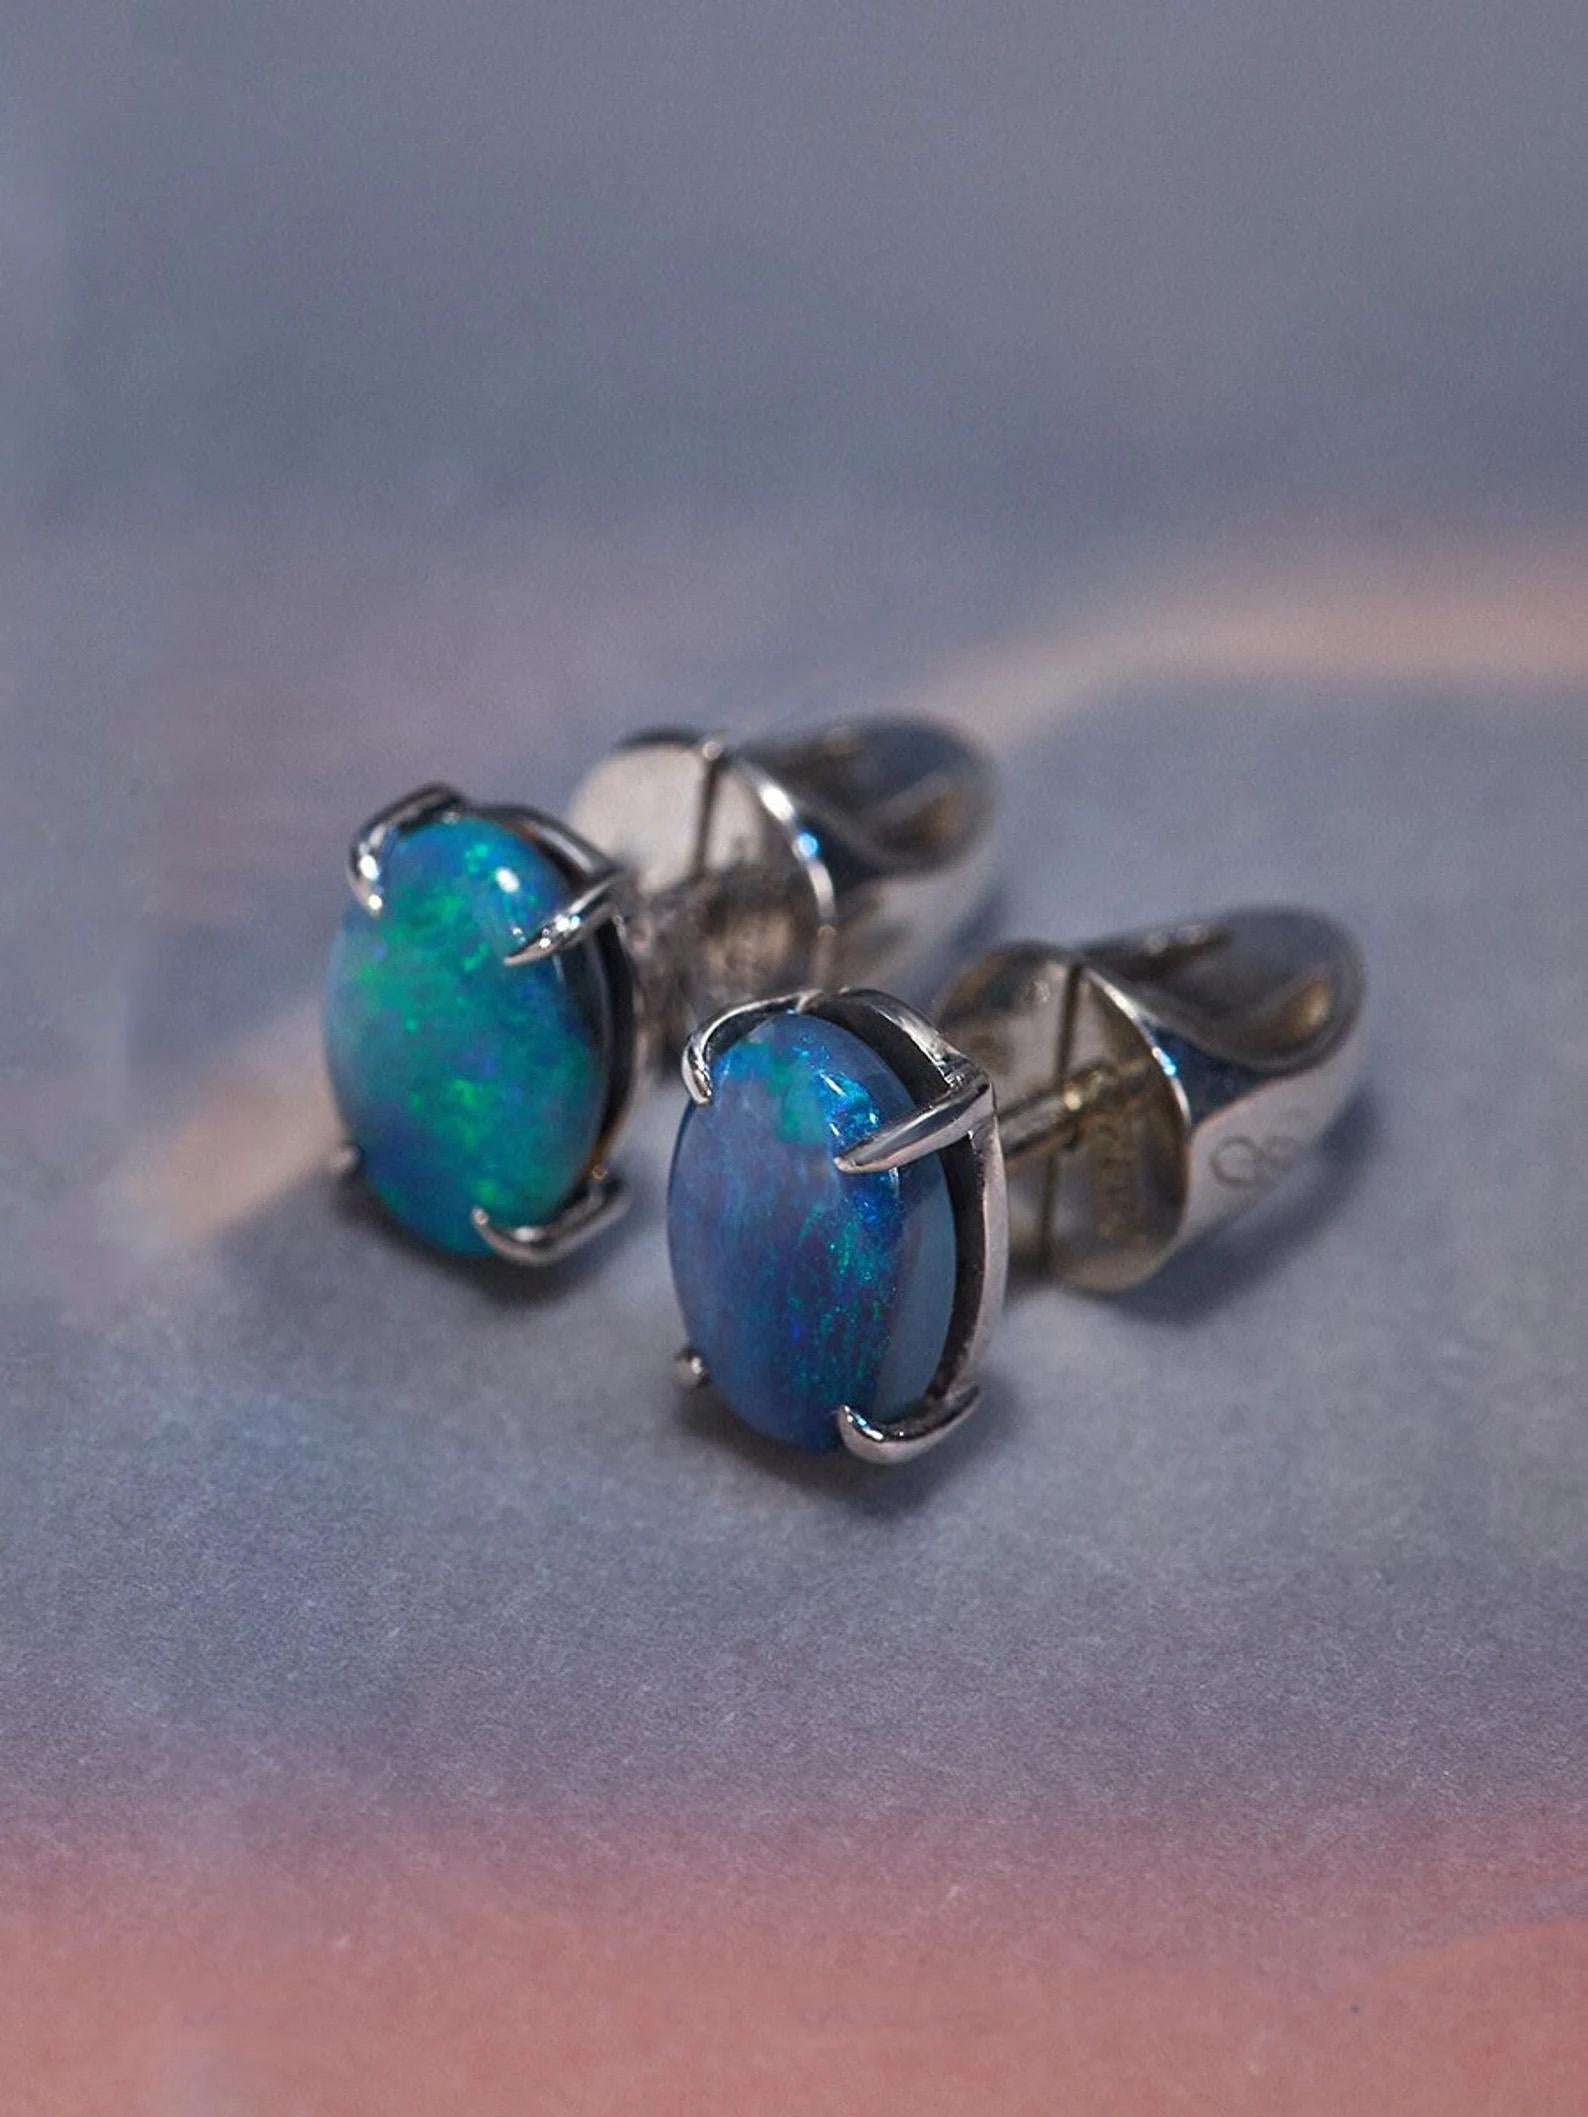 Silver earrings with natural Black Opal 
gemstones origin - Australia
stone measurements 0.24 x 0.31 in / 6 х 8 mm
opal weight - 1.10 carats
earrings weight - 2.21 grams